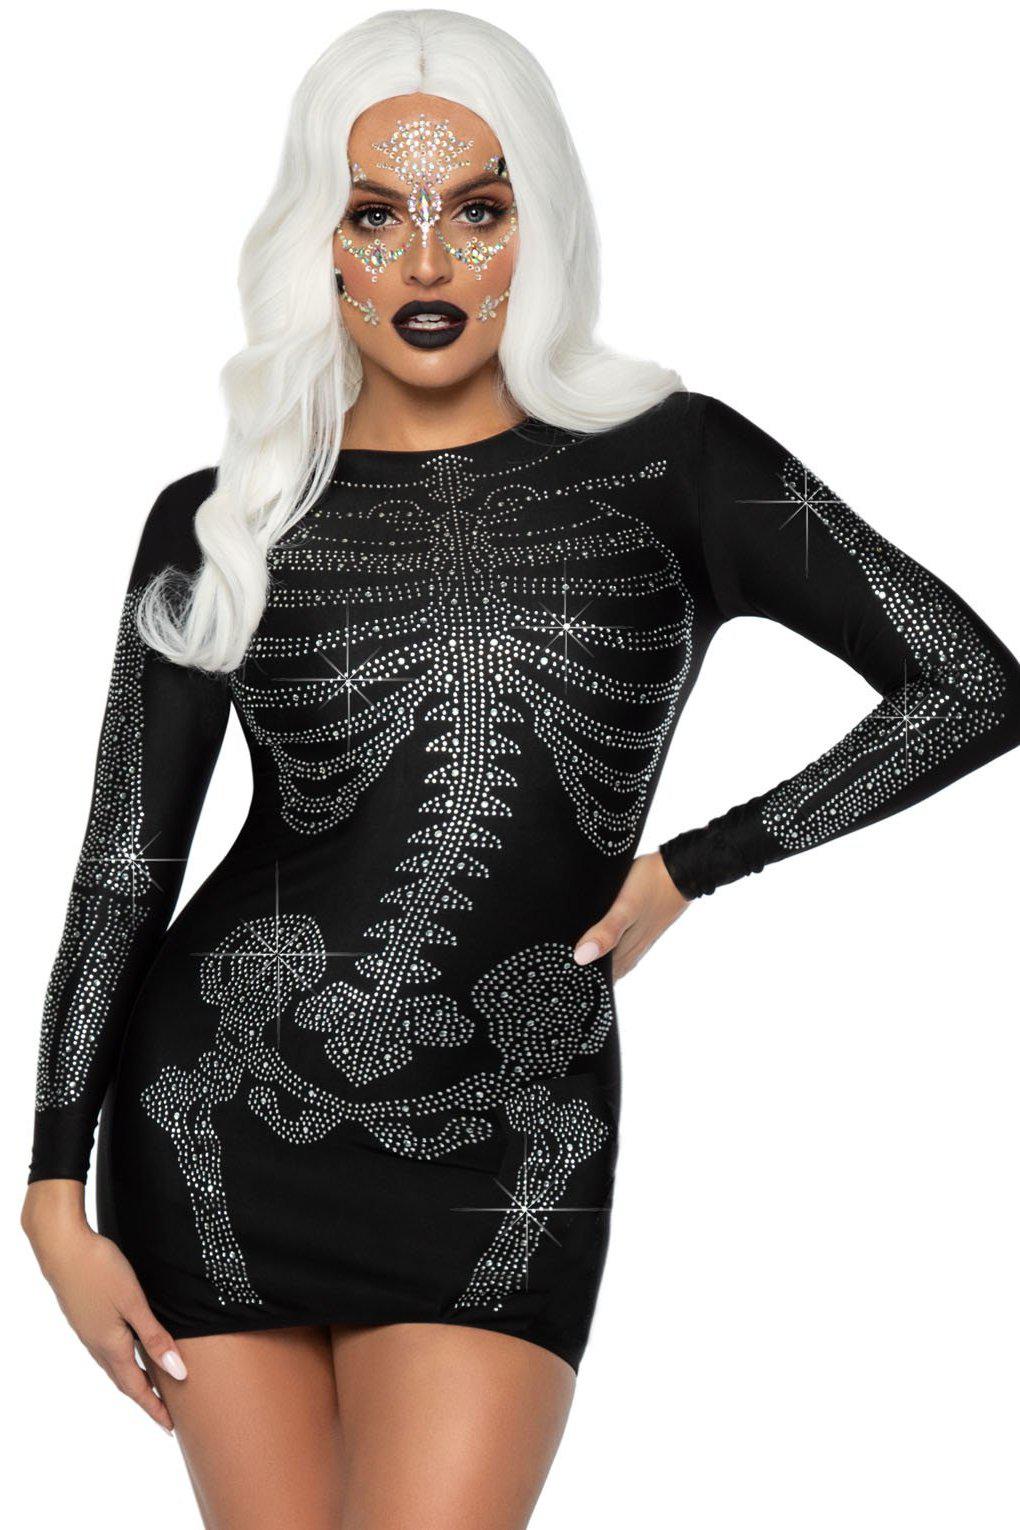 Rhinestone Spandex Skeleton Dress-Other Costumes-Leg Avenue-Black-S-SEXYSHOES.COM